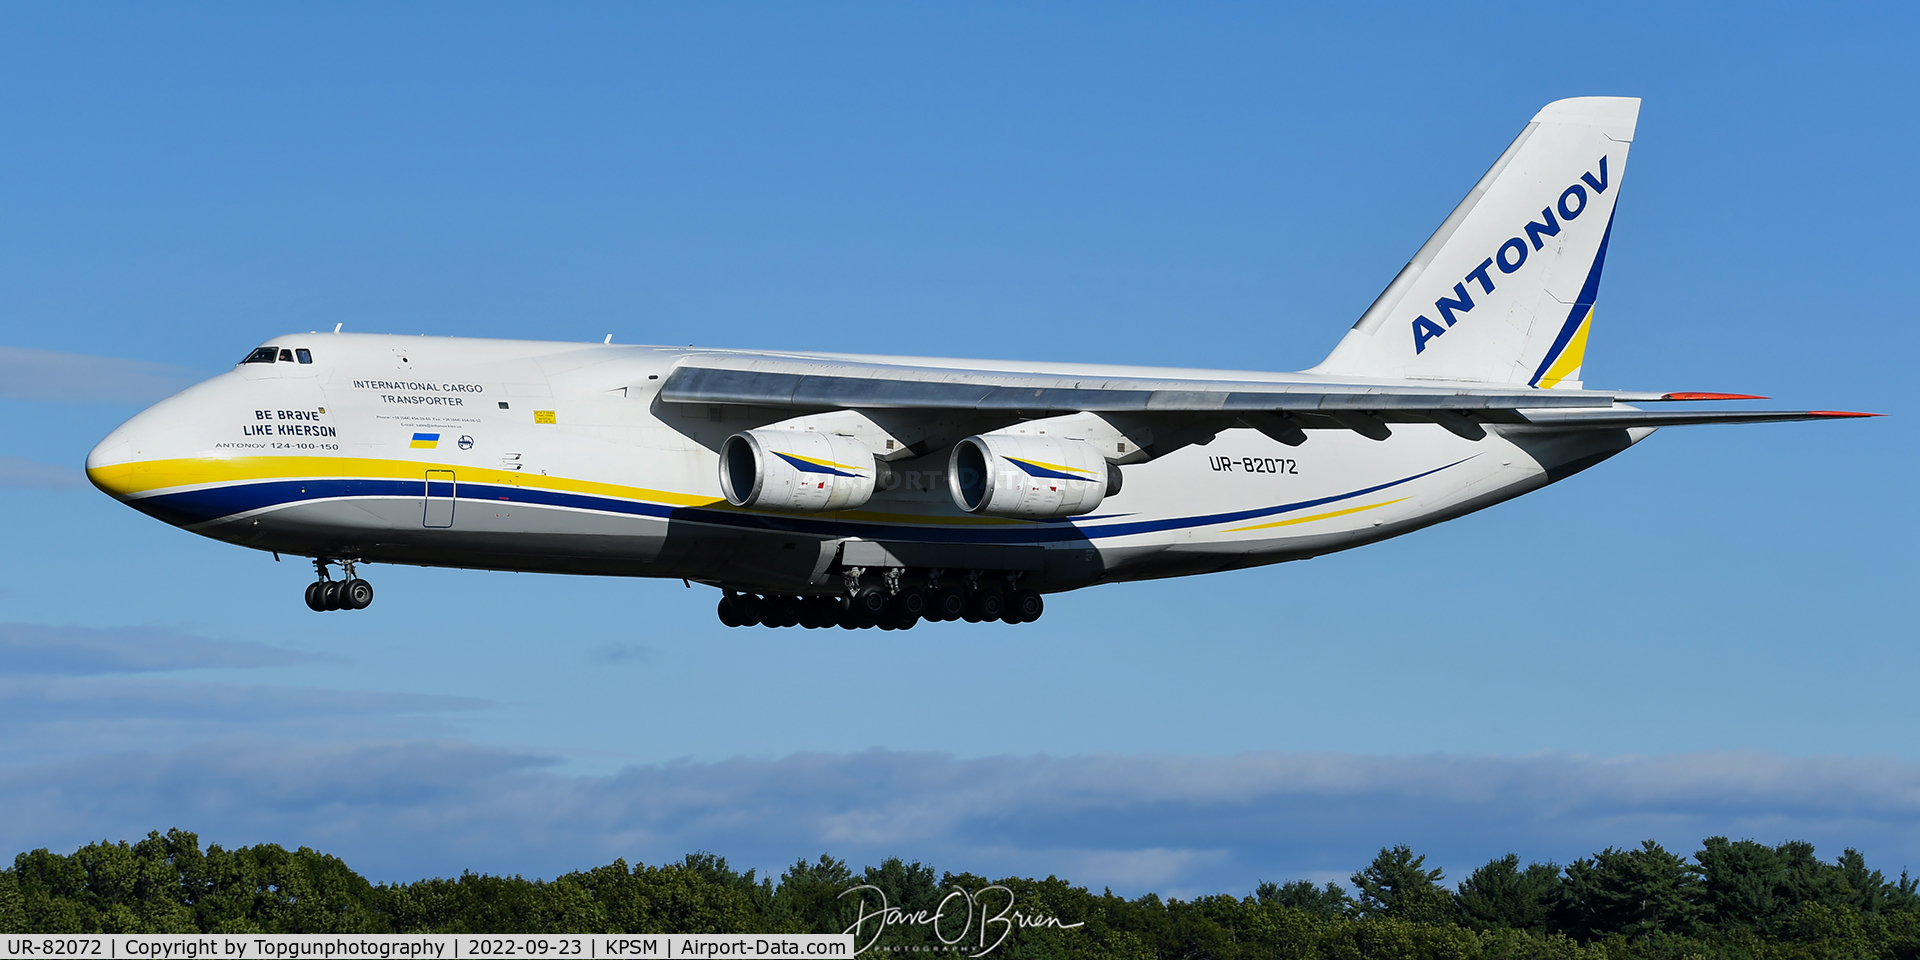 UR-82072, 1993 Antonov An-124-100 Ruslan C/N 9773053359136, ADB3374 arriving at Pease